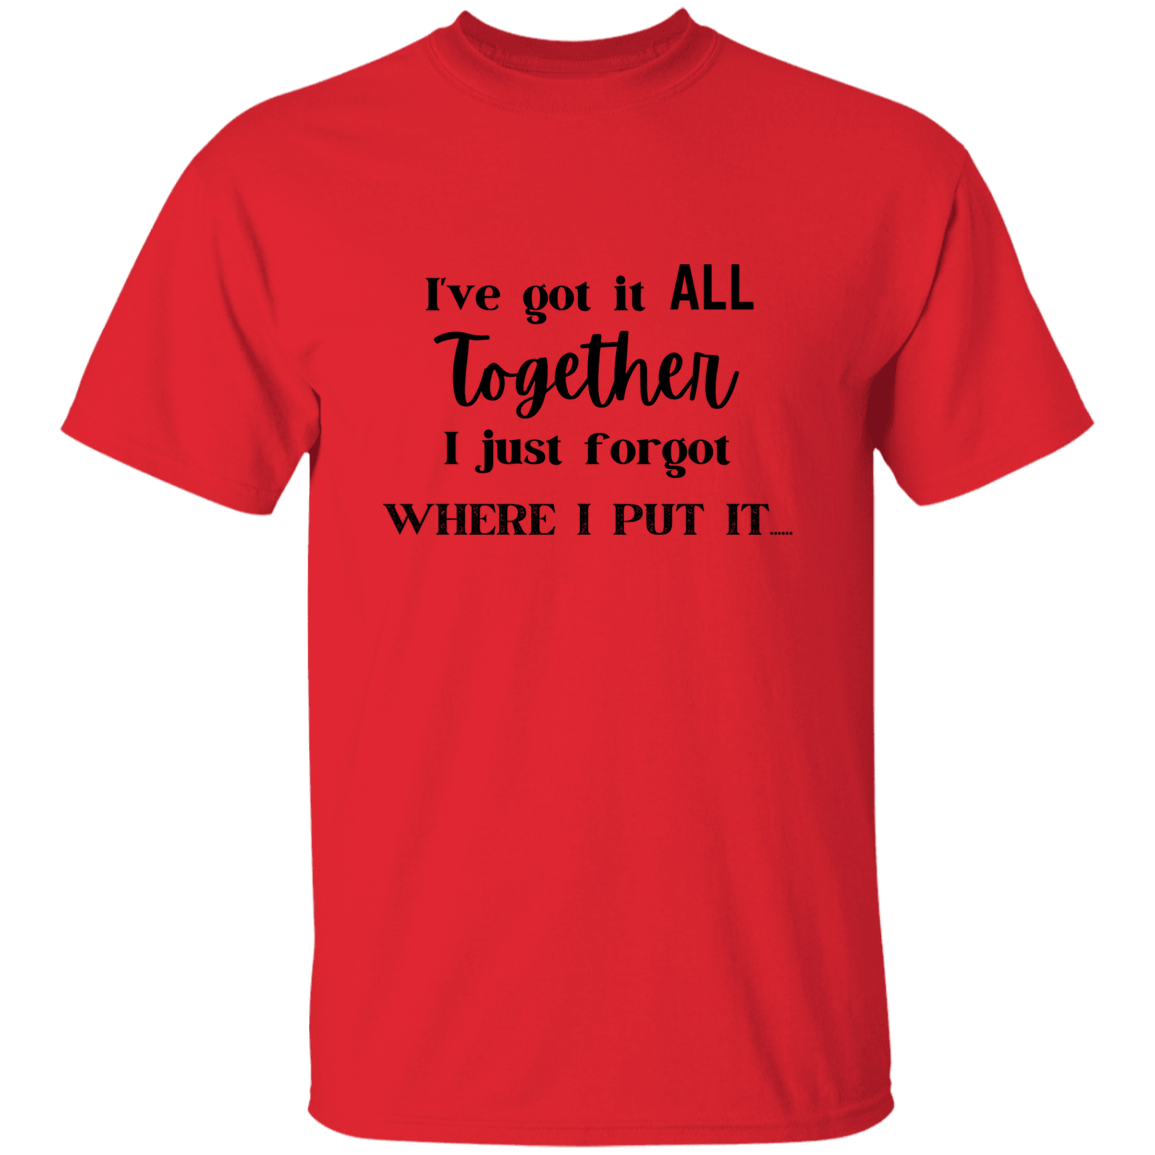 I've got it all together T-Shirt, Novelty T-shirt, Sarcastic T-shirt